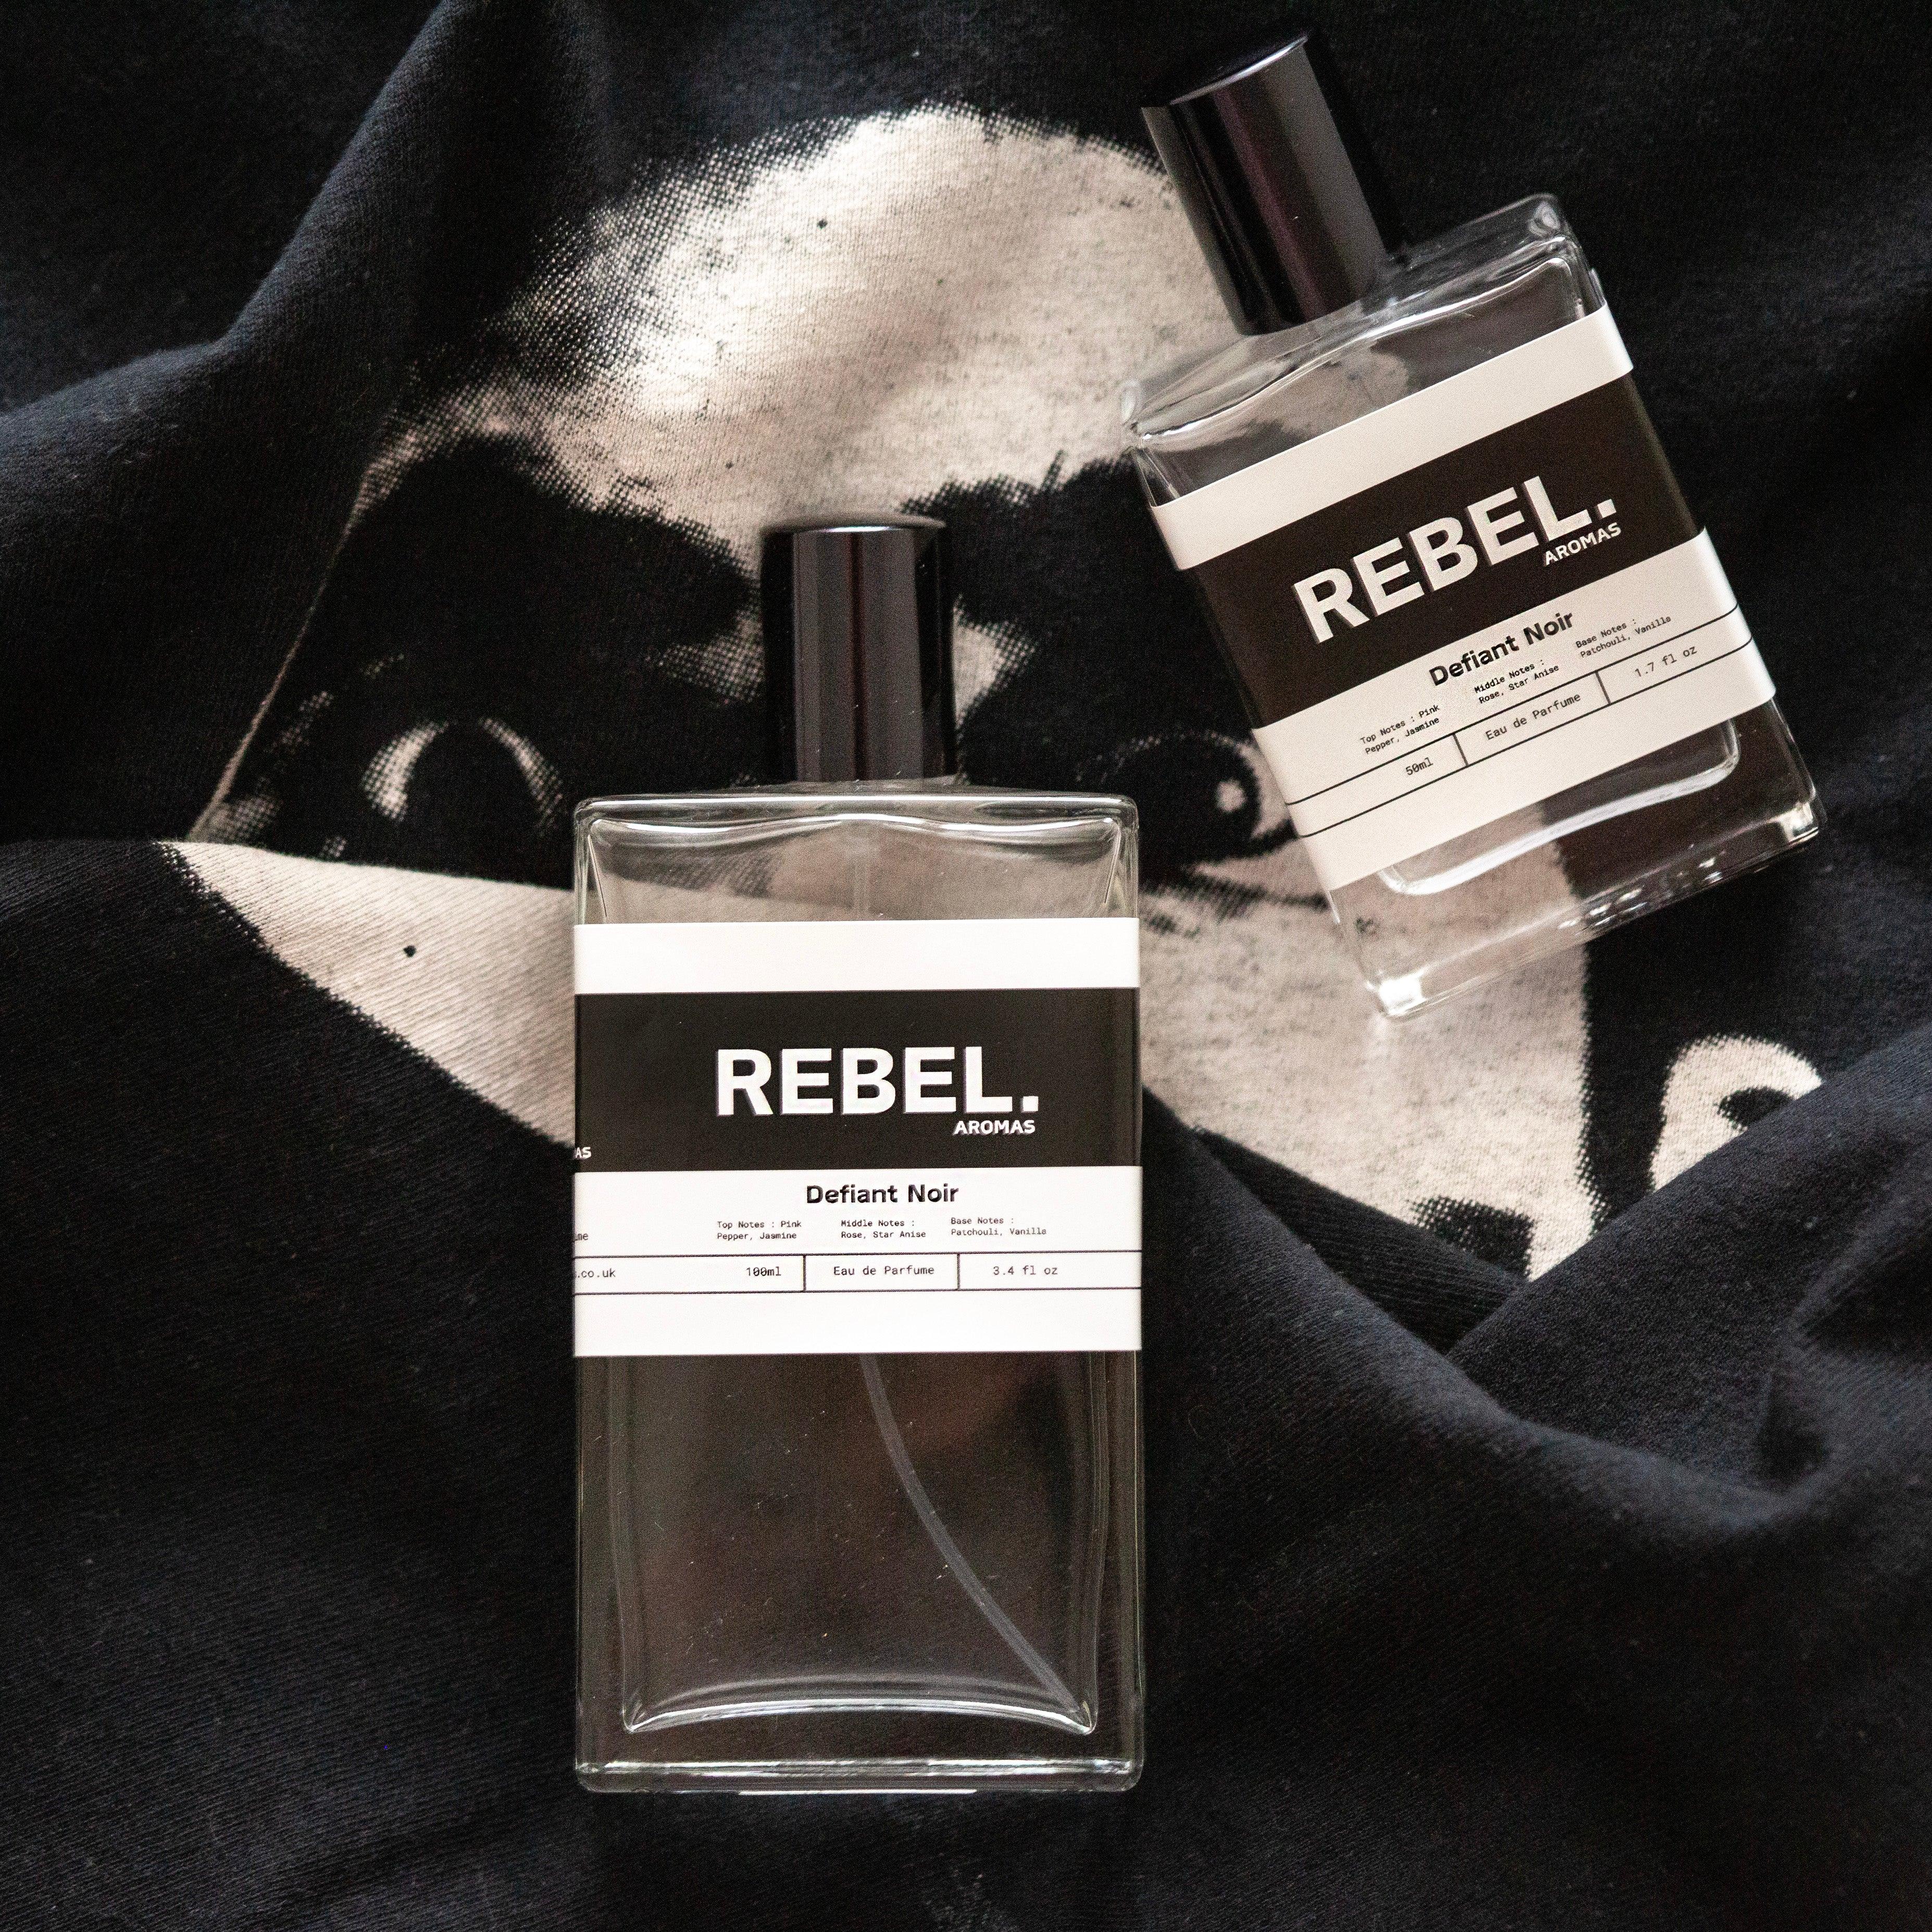 Defiant Noir - Rebel Aromas